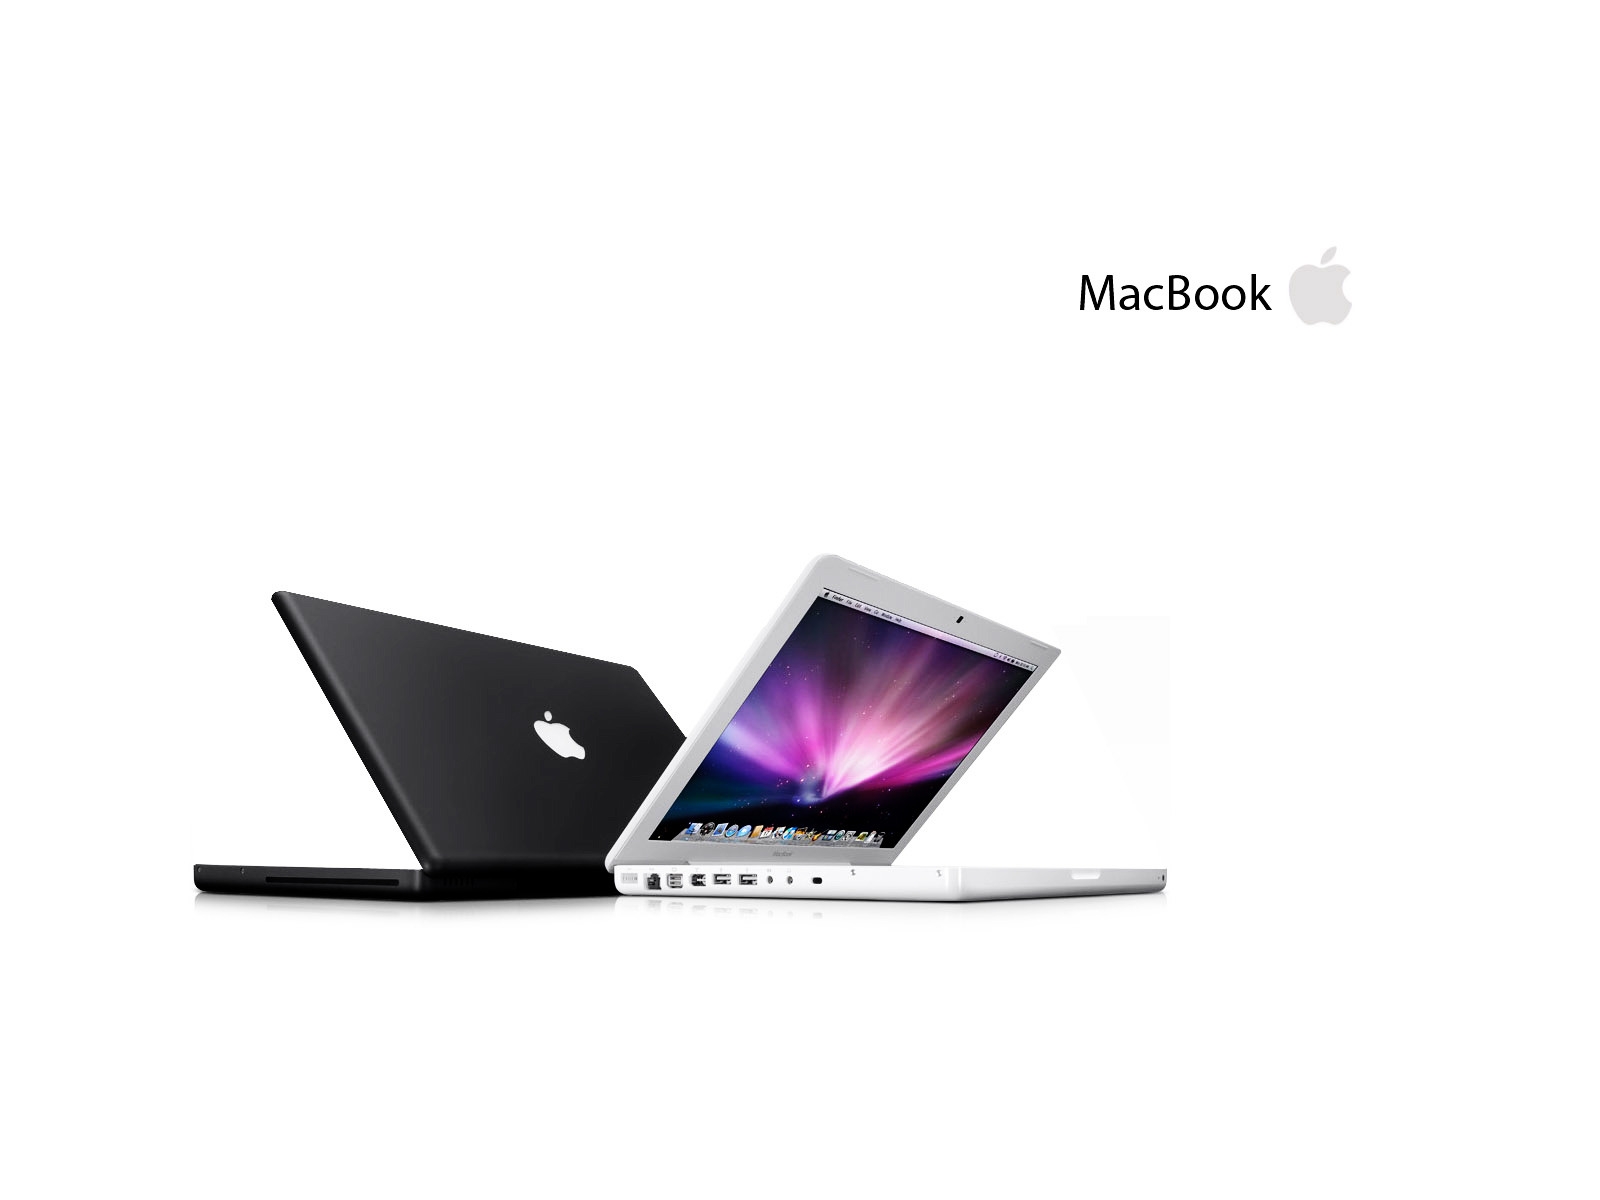 Apple MacBook for 1600 x 1200 resolution